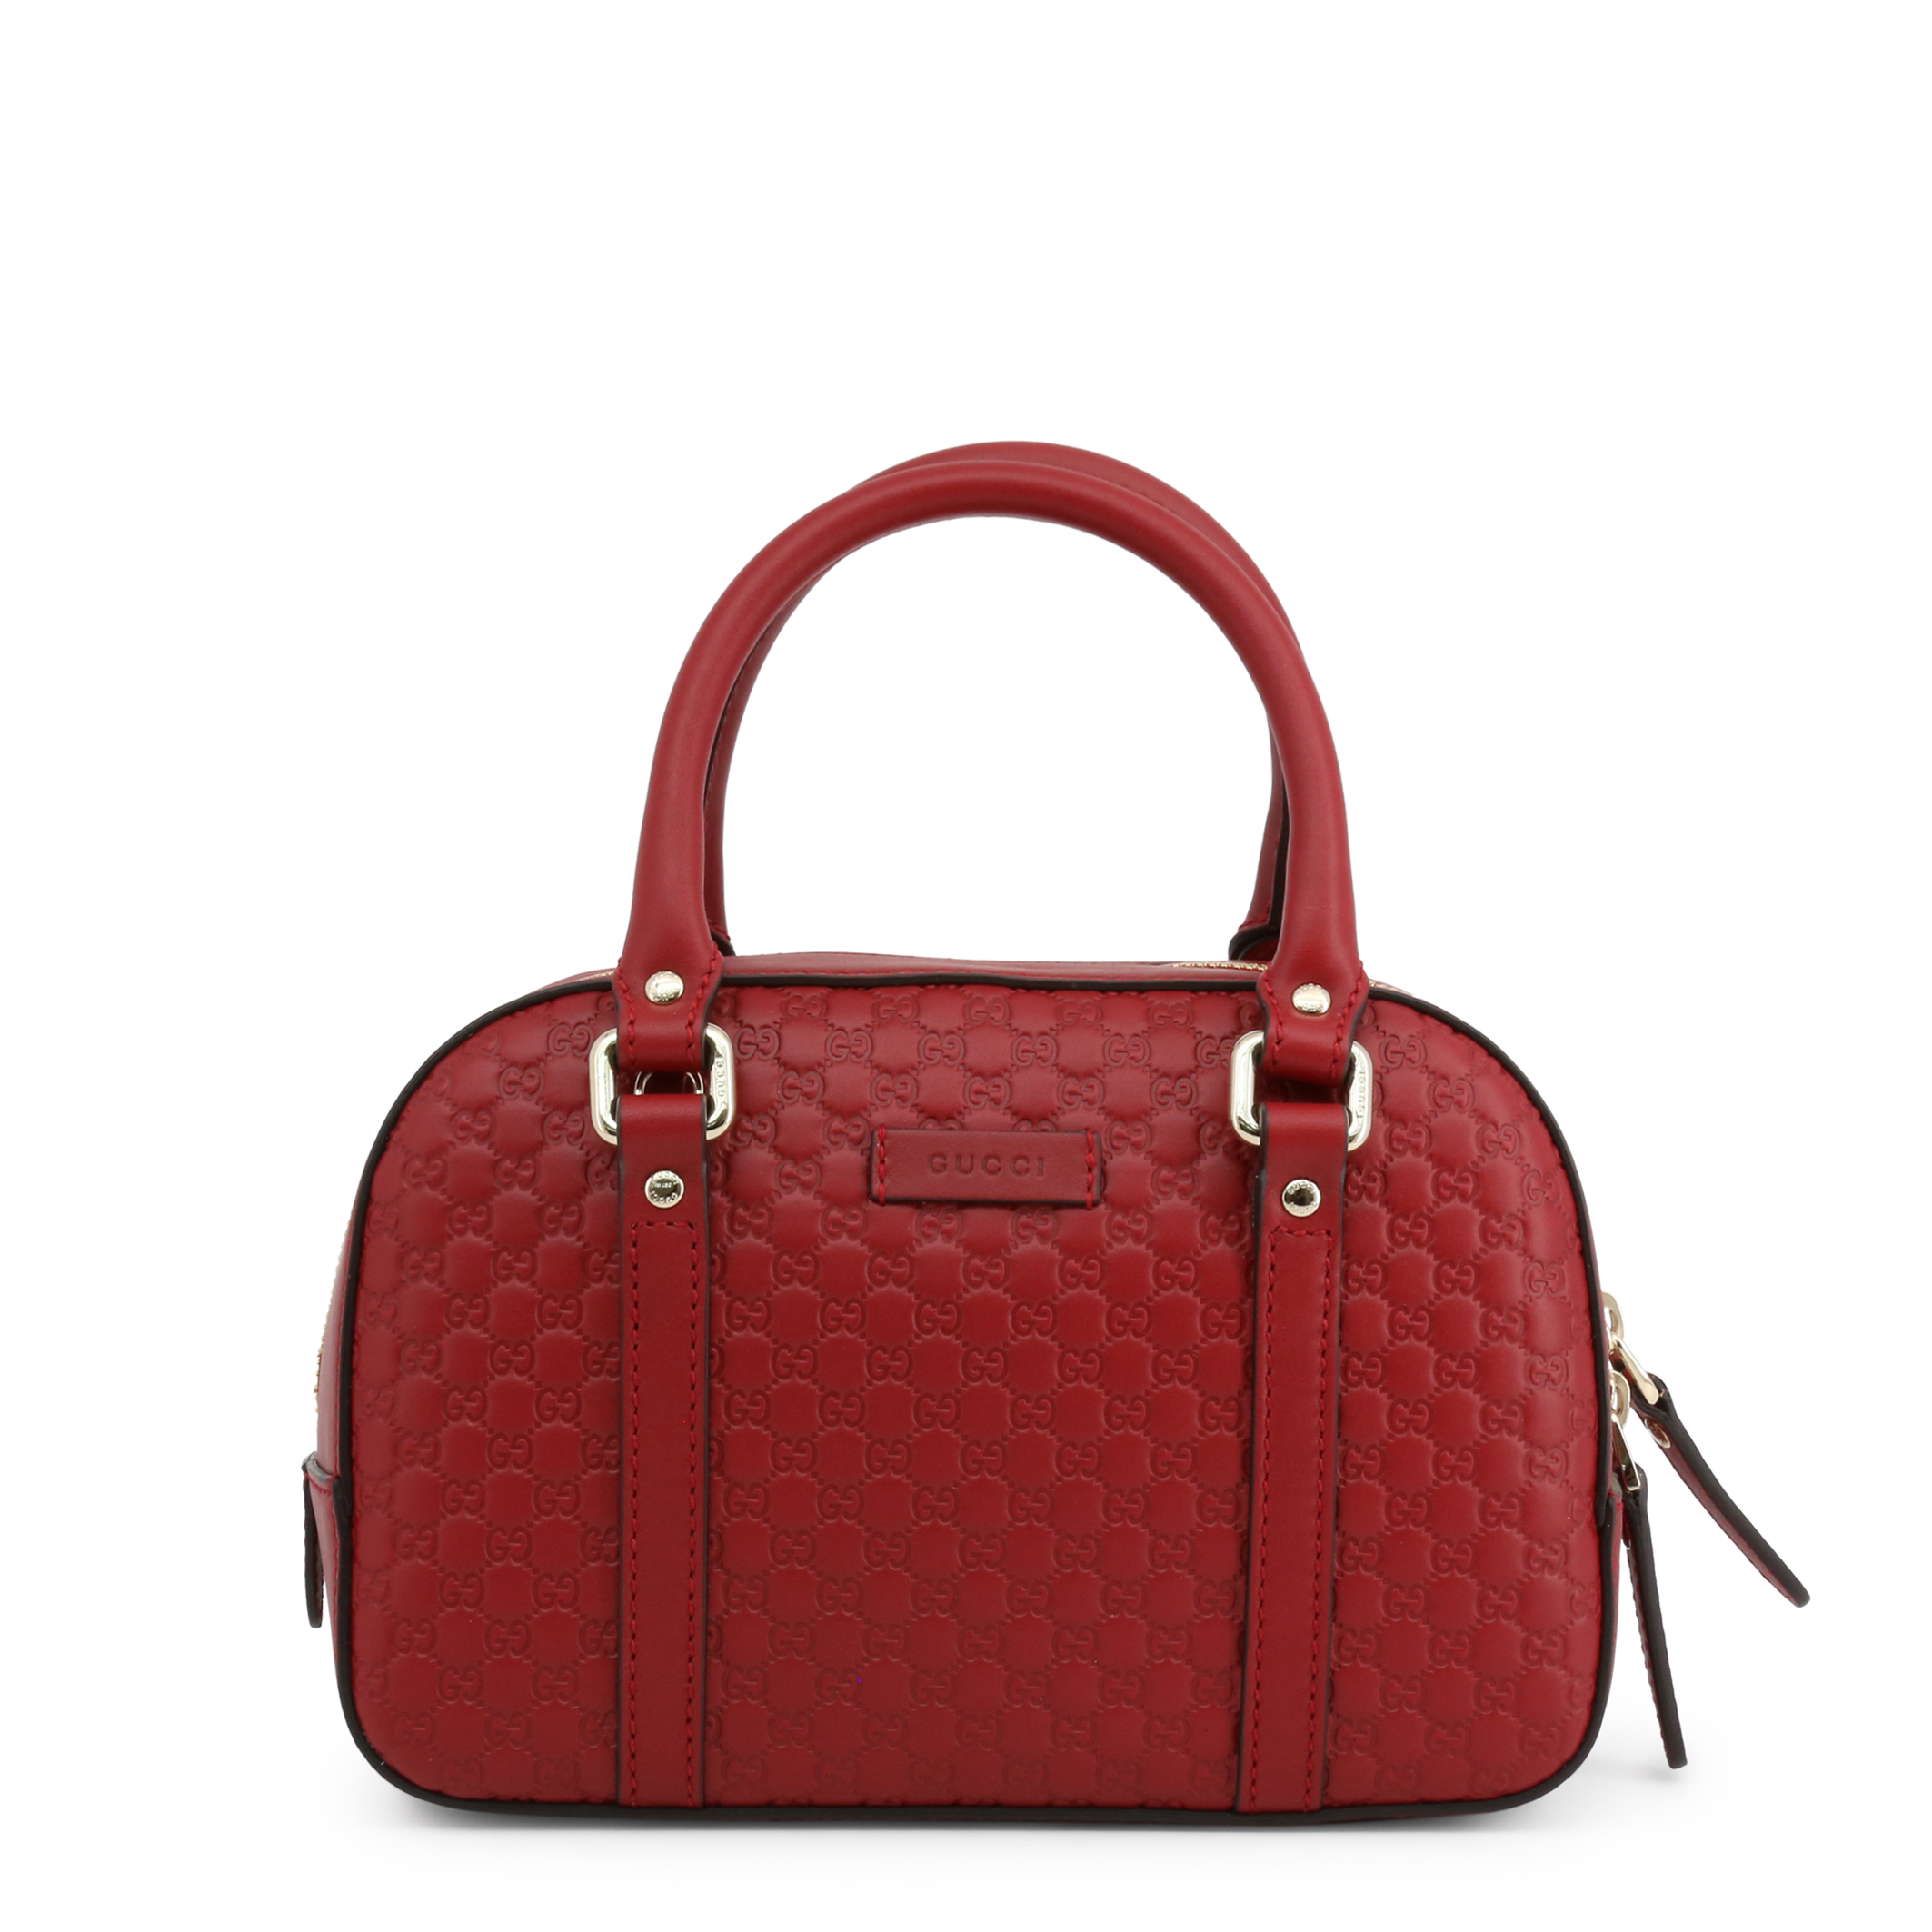 Gucci Womens Crossbody Bags NOSIZE | eBay